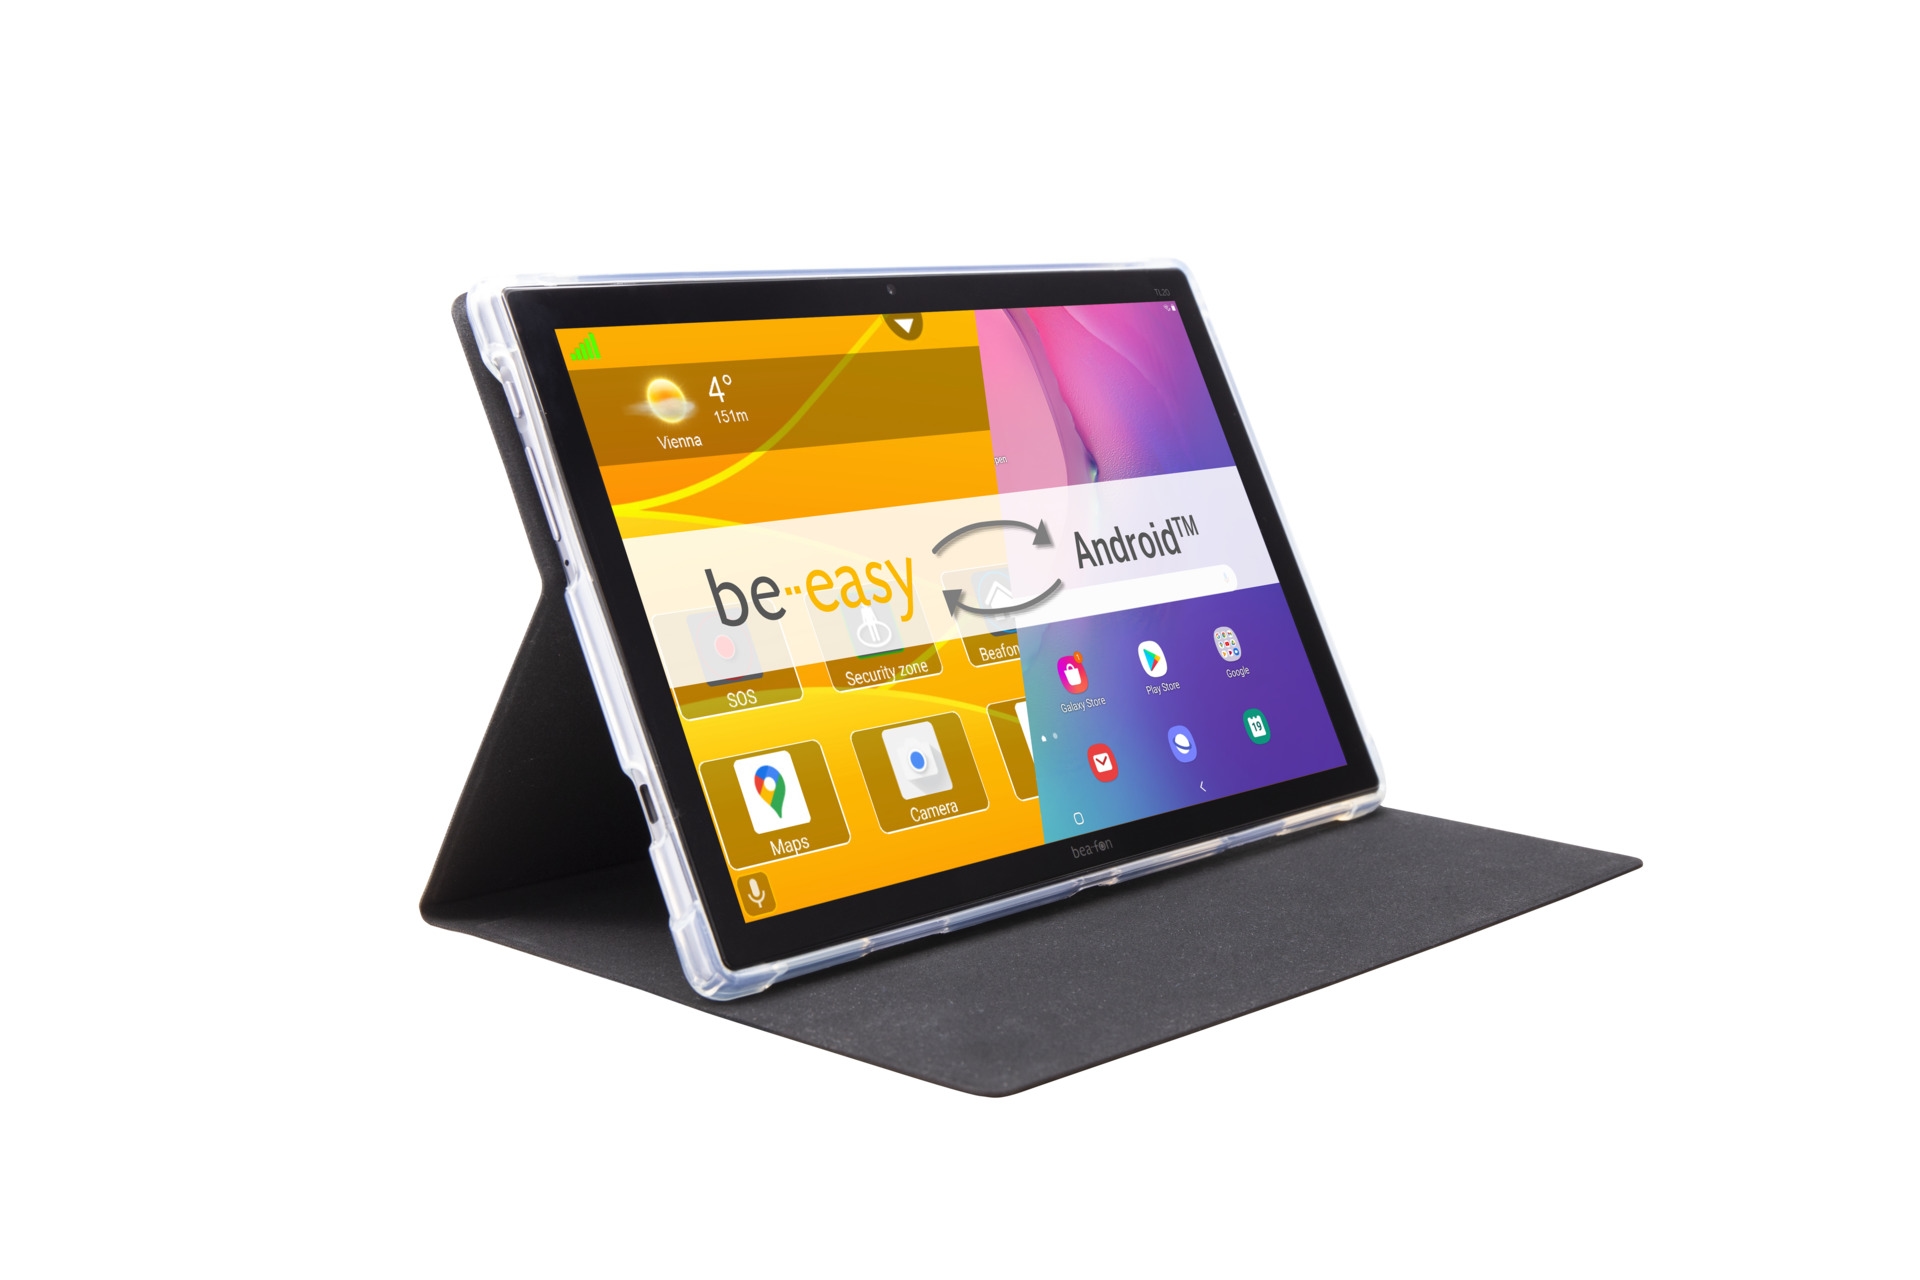 Beafon Tablet »TAB-Pro TL20«, (Android)